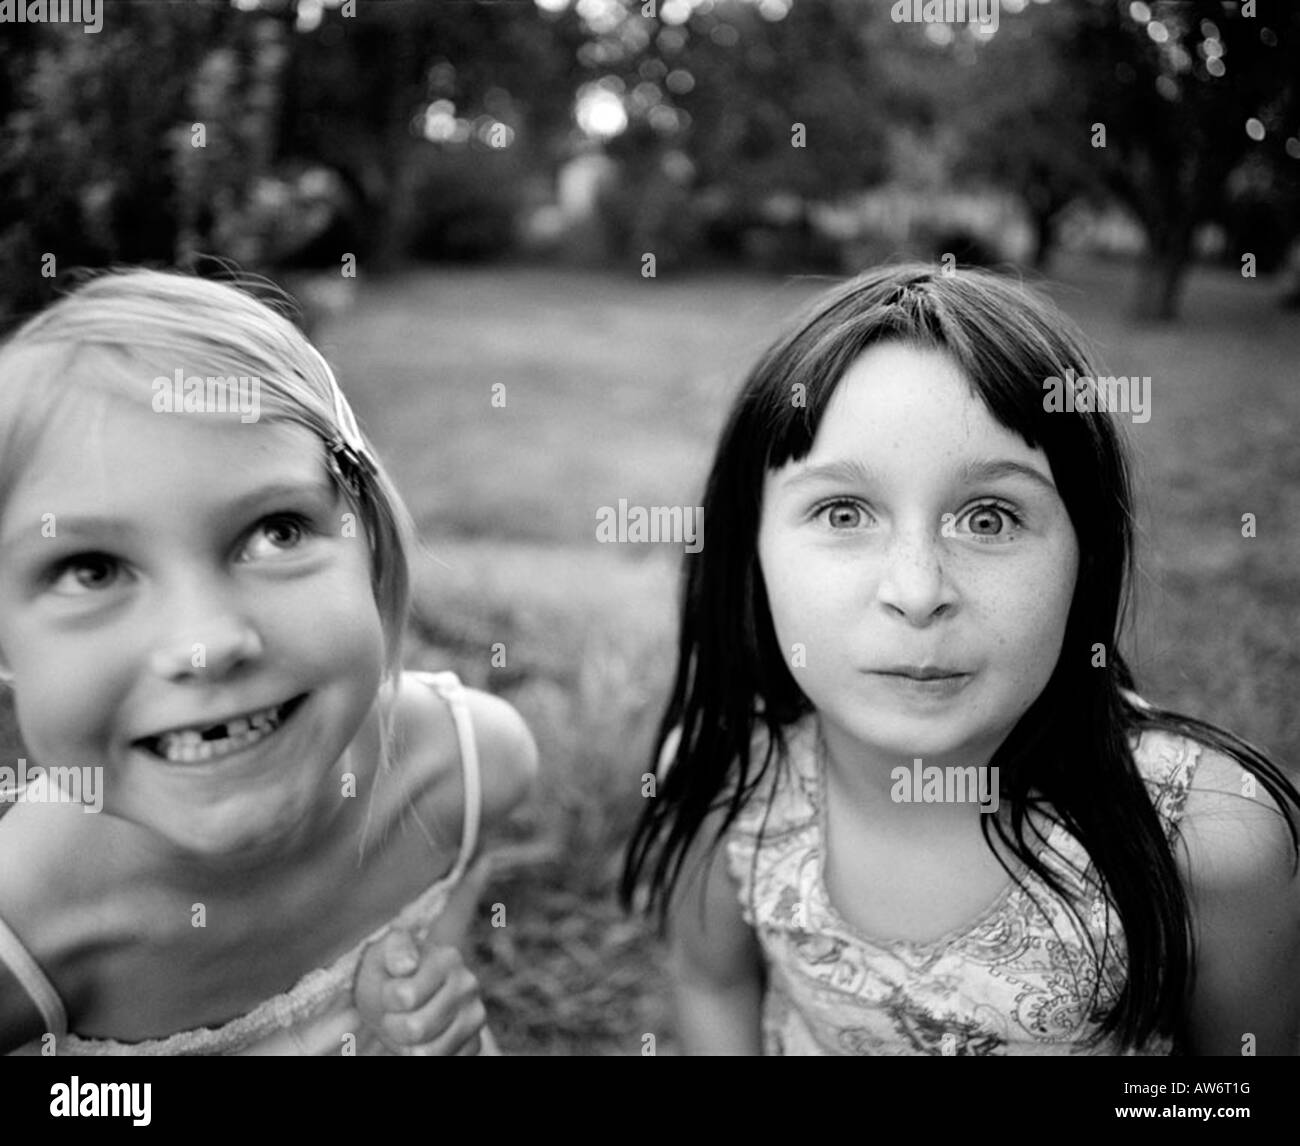 Portrait of happy girls outdoors Stock Photo